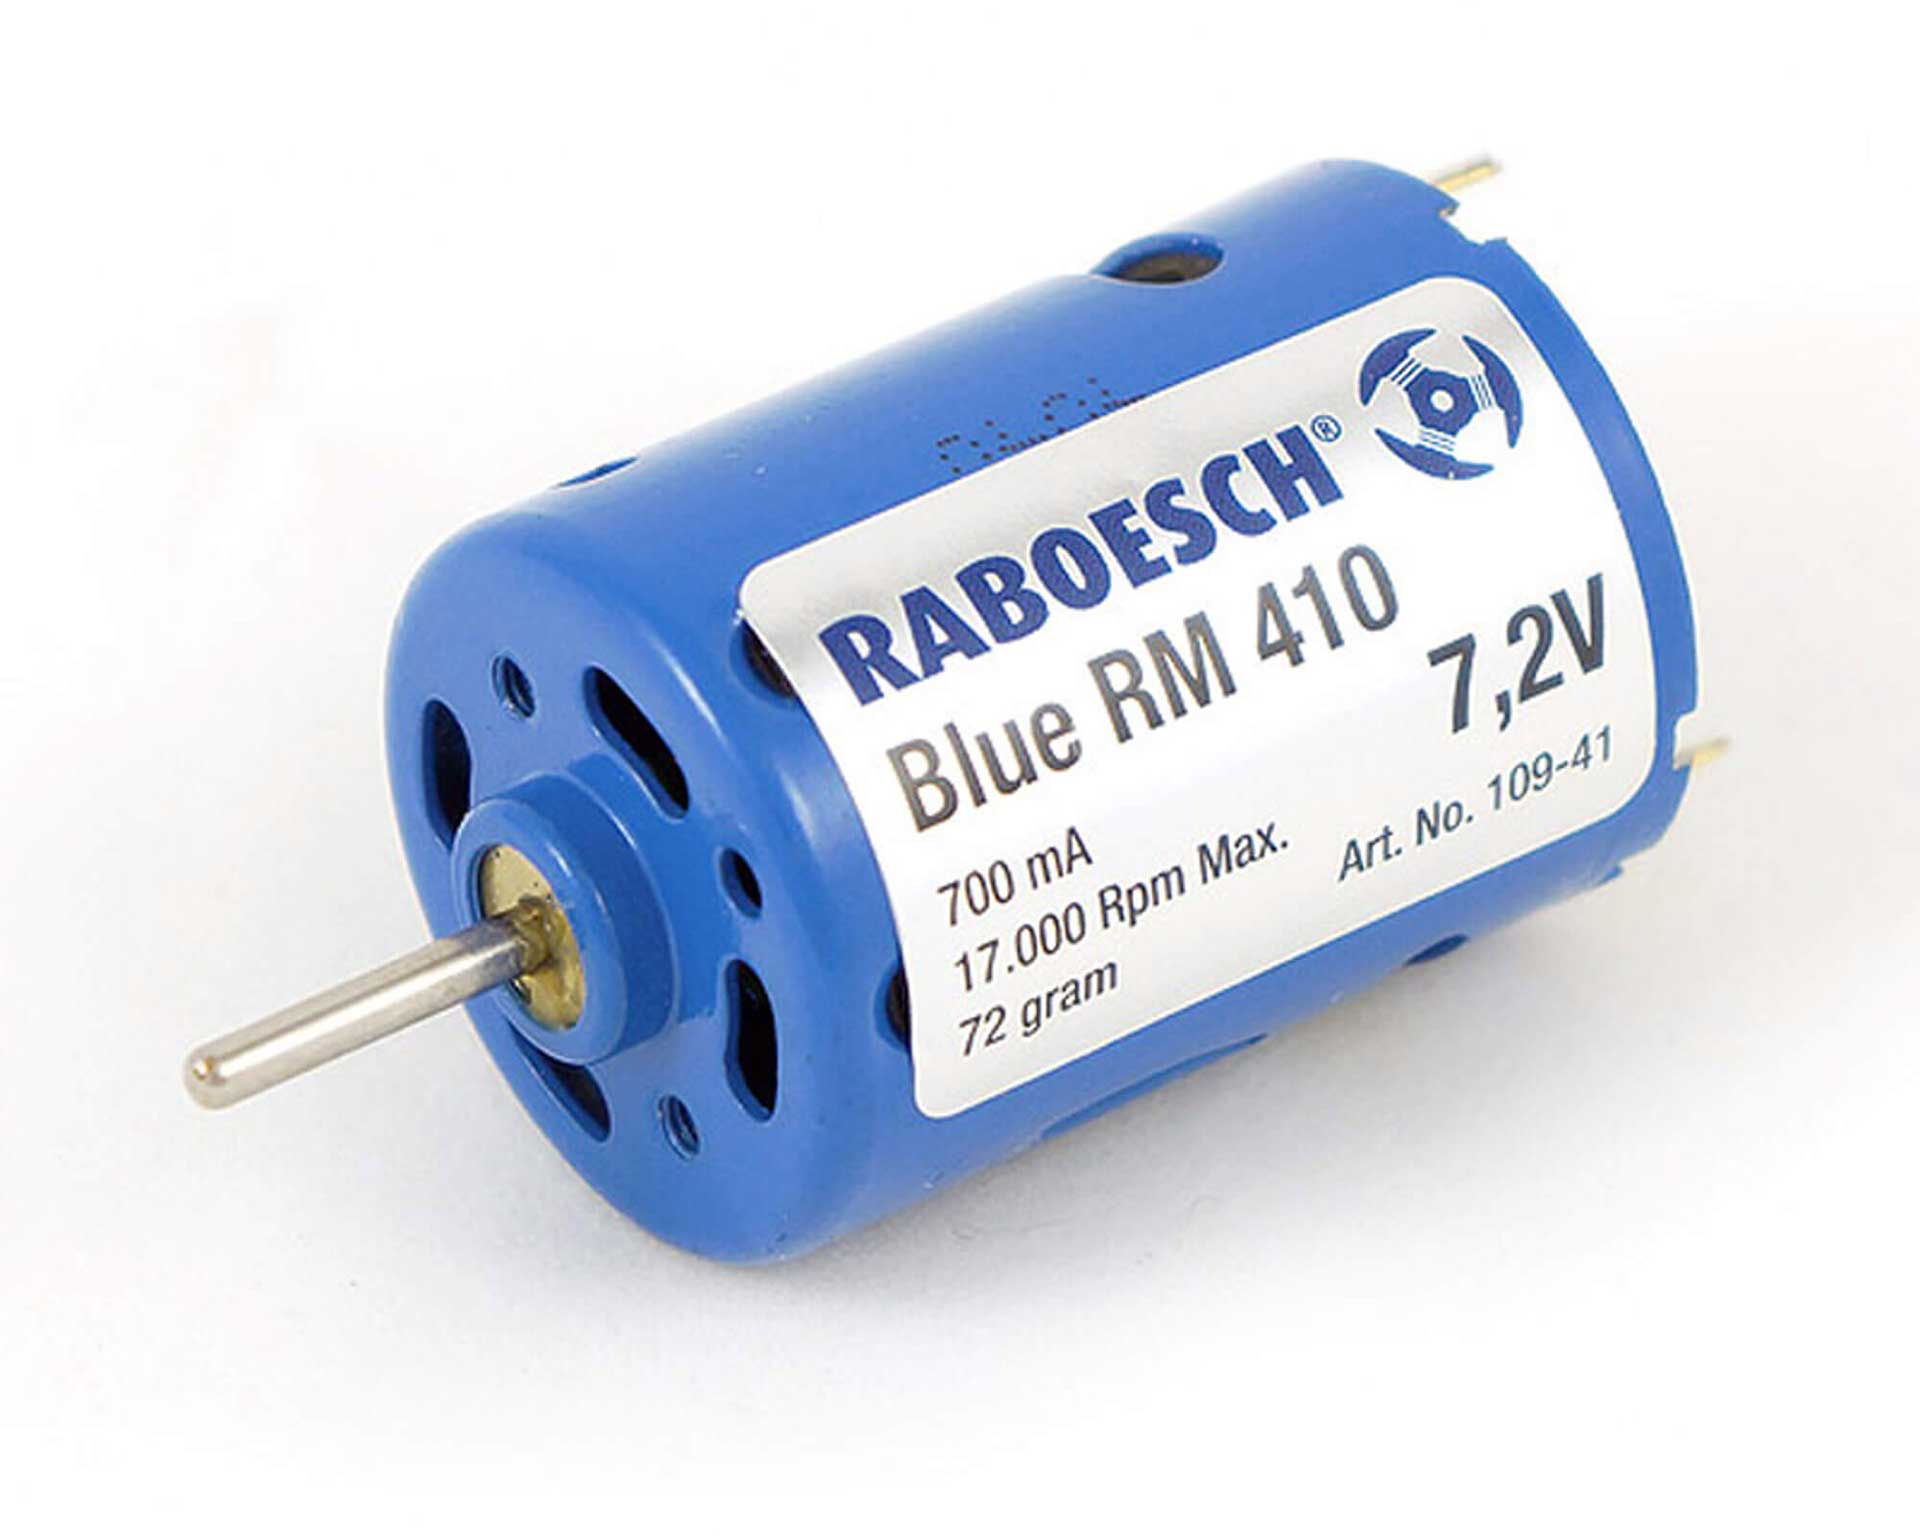 RABOESCH Elektromotor Blue RM-410 7,2V